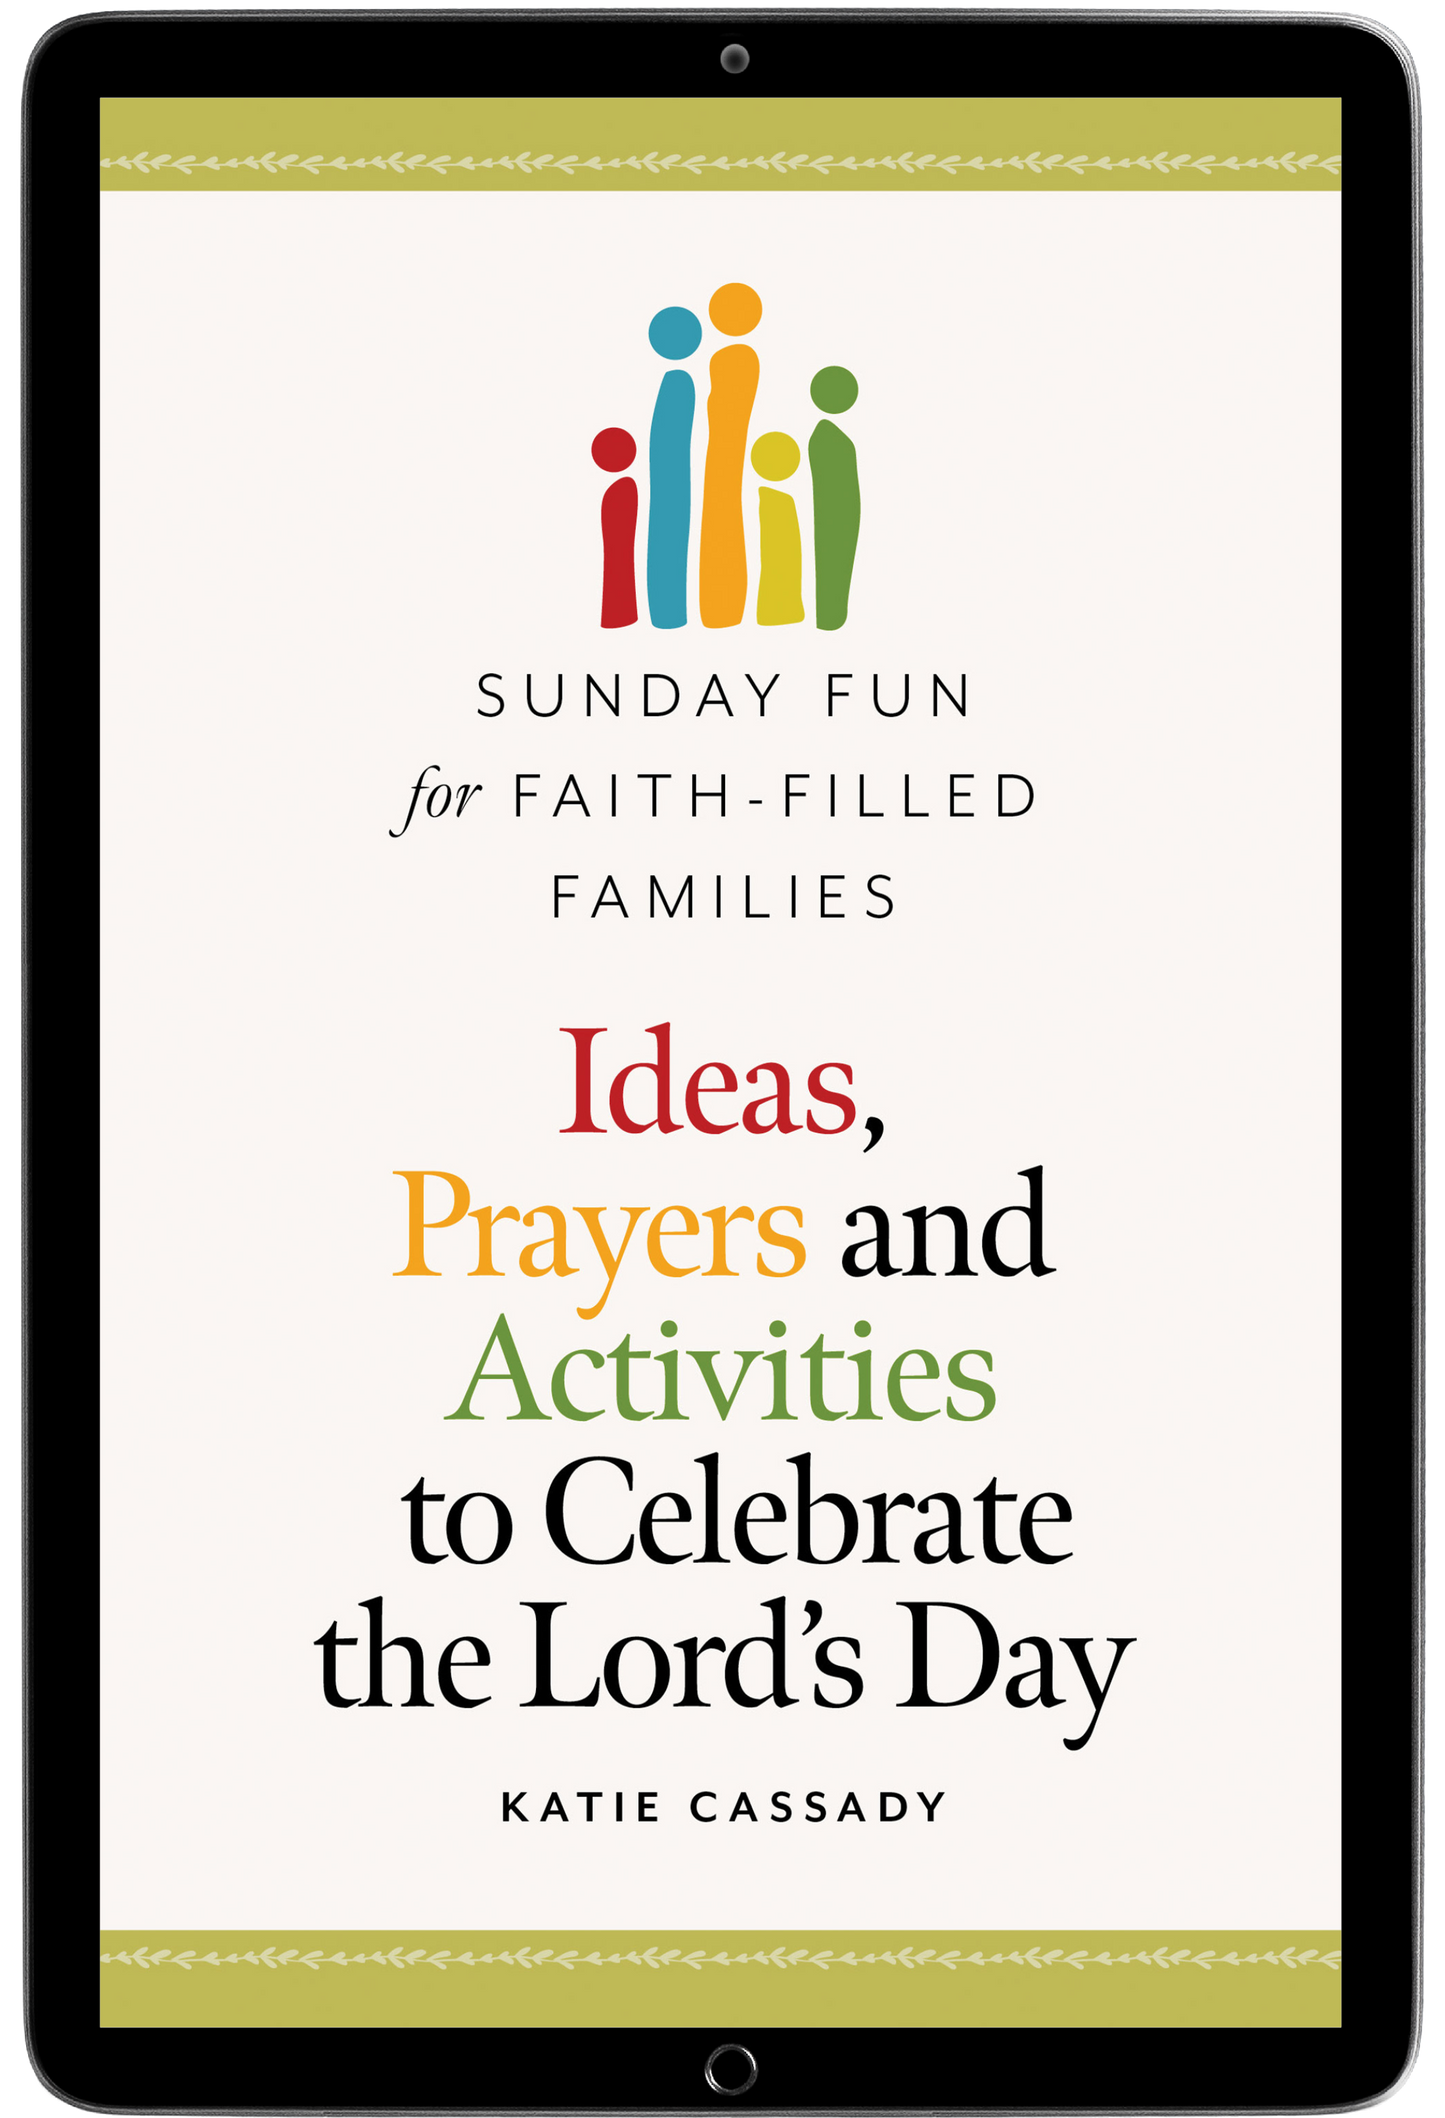 Sunday Fun for Faith-Filled Families (Individual Use)